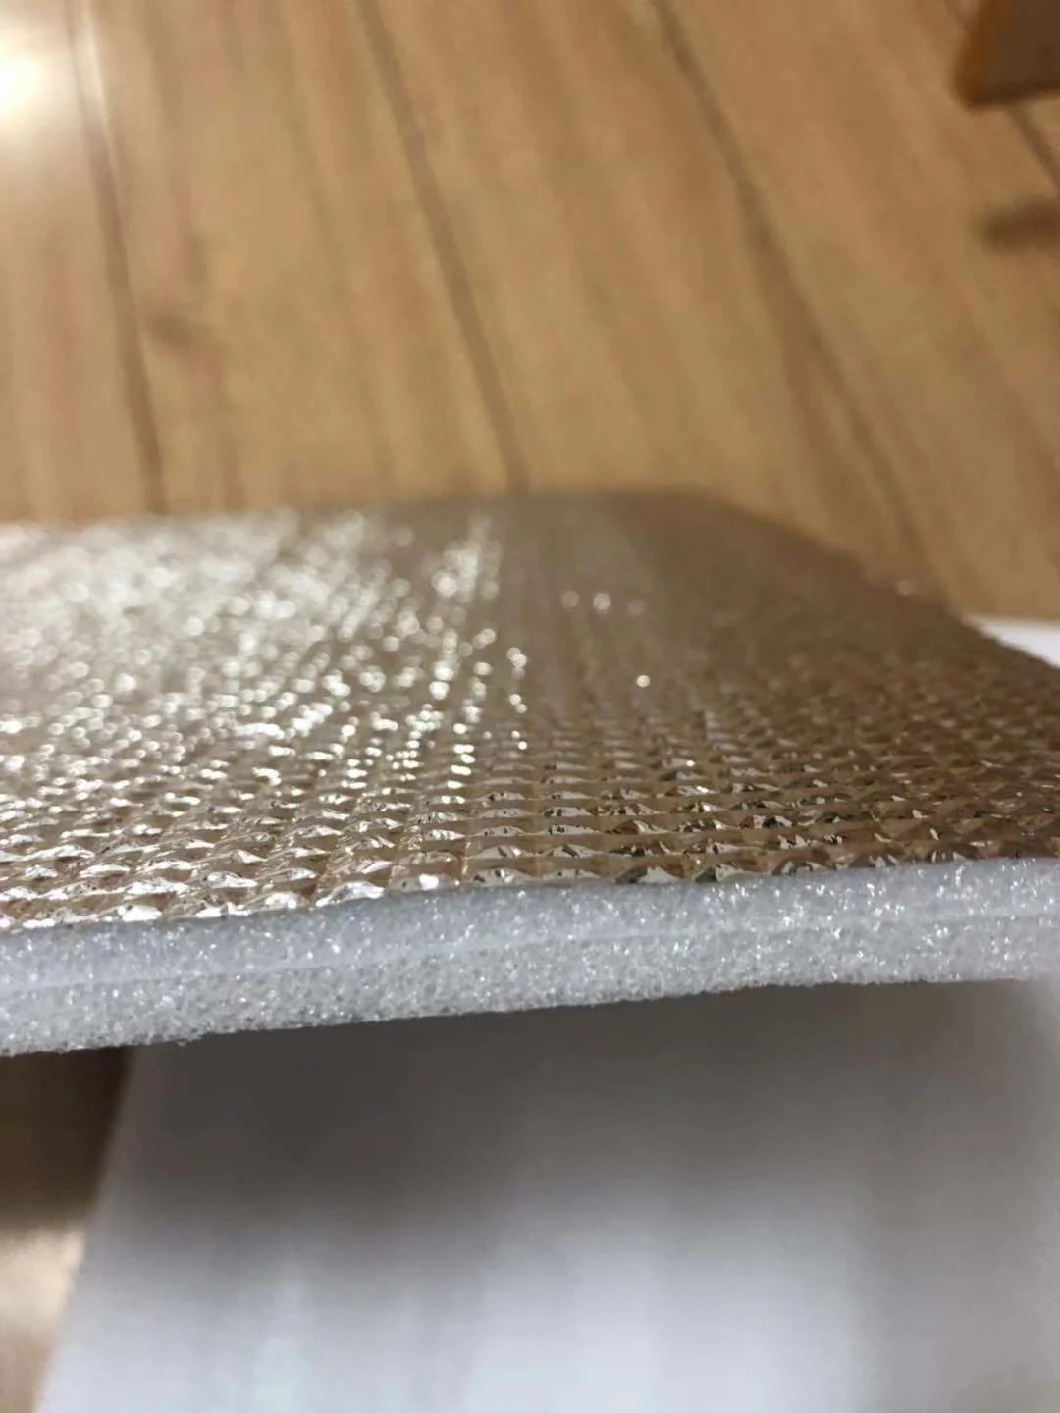 Fire Retardant Alminum Foil Backed Foam Insulation for Wall Heat Reflective